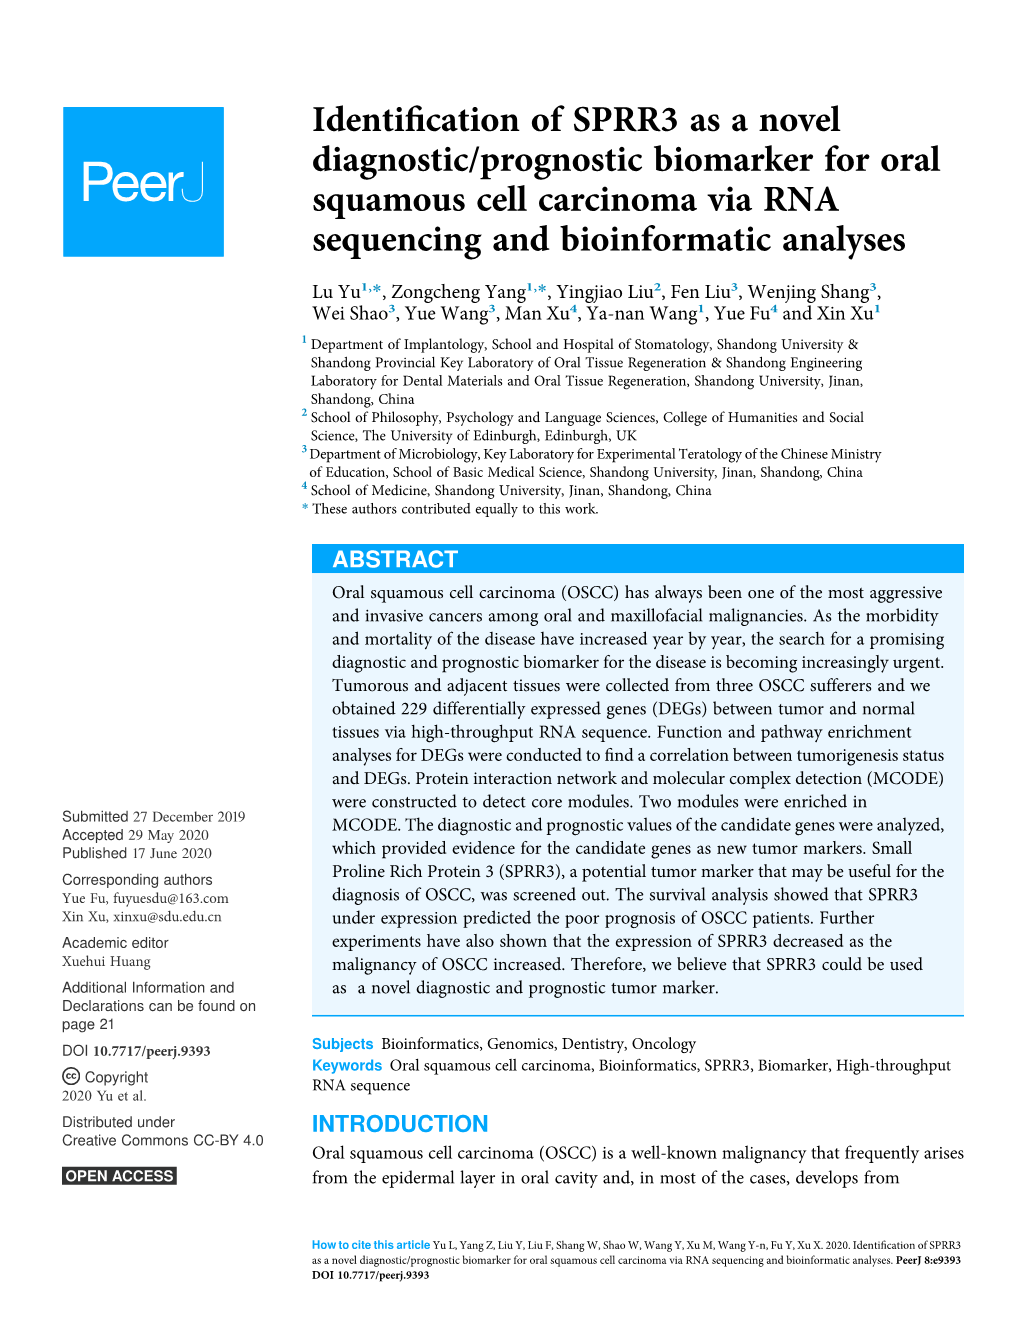 Identification of SPRR3 As a Novel Diagnostic/Prognostic Biomarker For